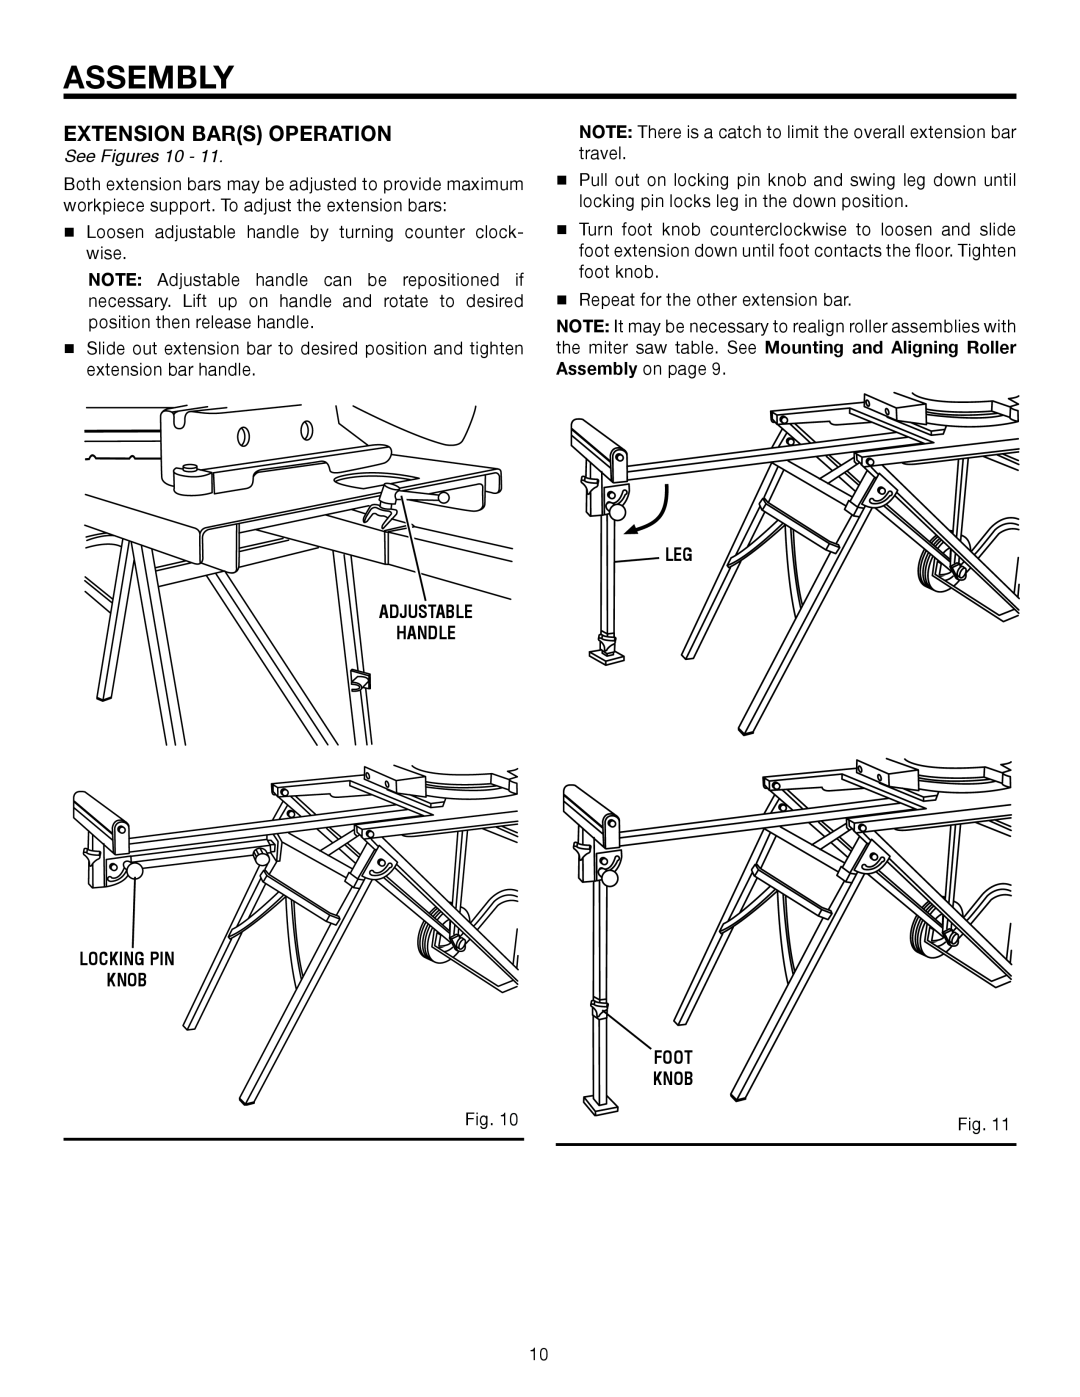 RIDGID AC99402 manual Extension Bars Operation, See Figures 10, Adjustable Handle Locking Pin Knob, Leg Foot Knob, Assembly 